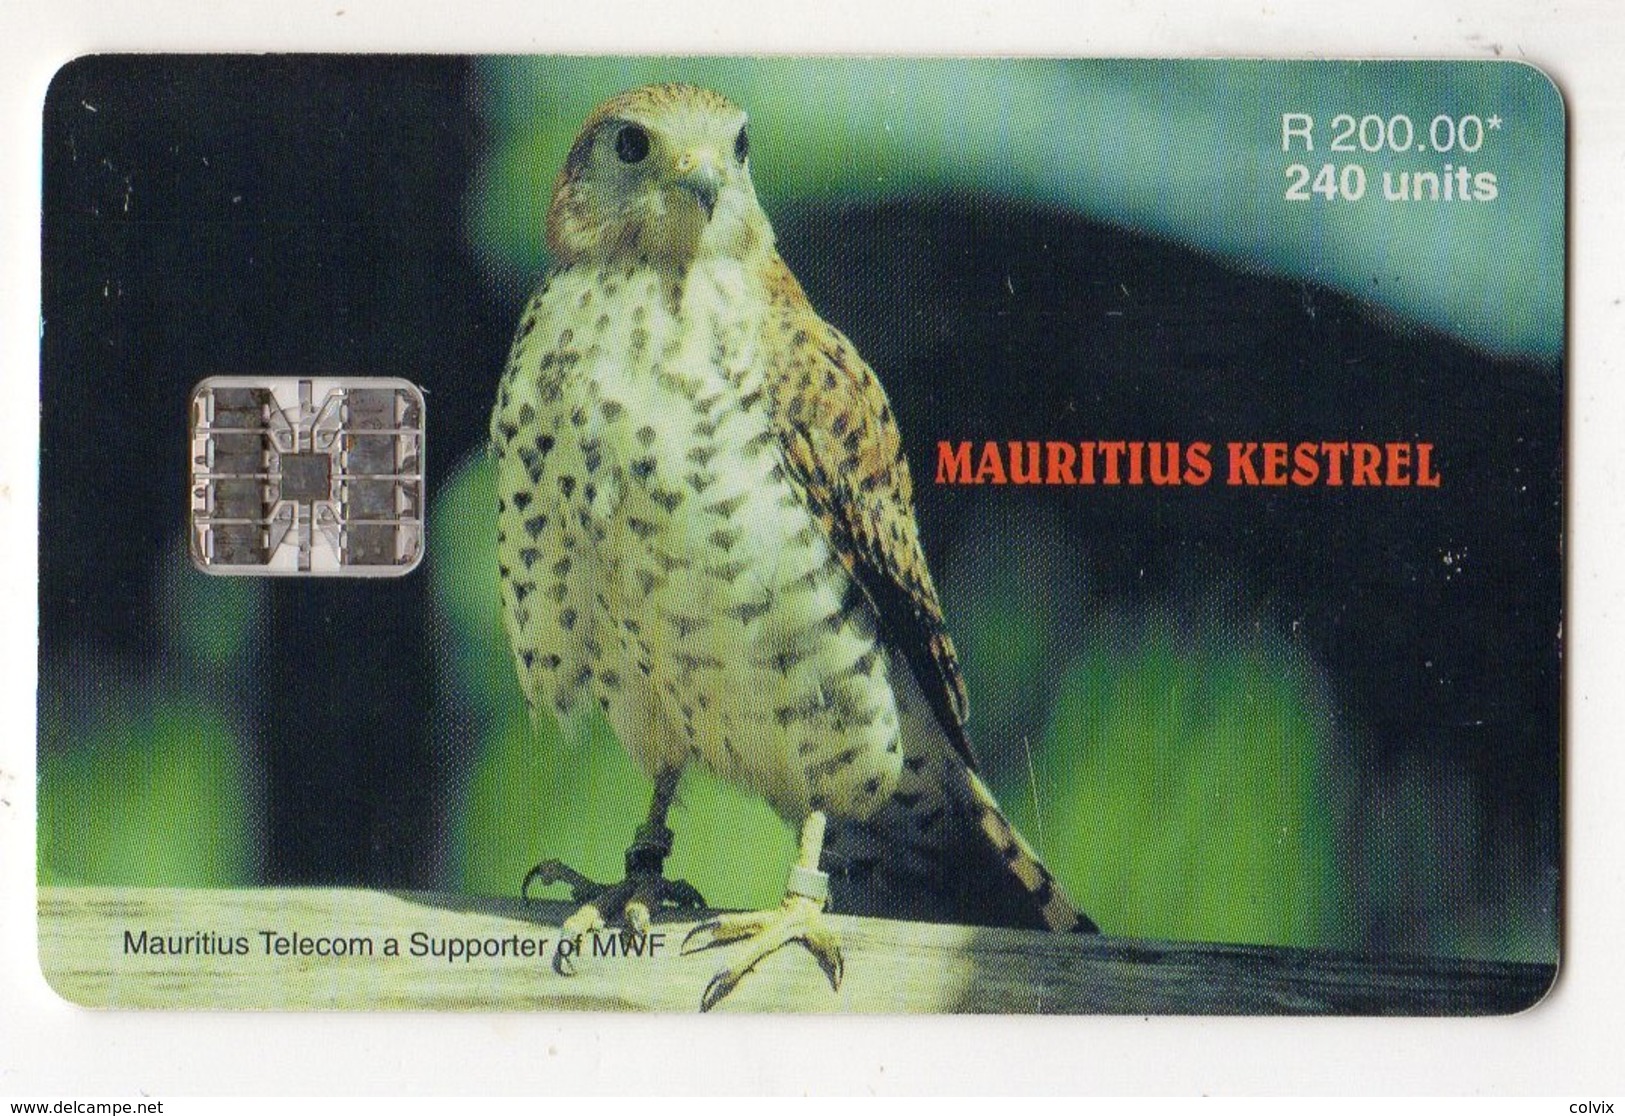 MAURICE Ref MV Cards MAU-41  240 U MAURITIUS KESTREL Date 2000 - Mauritius